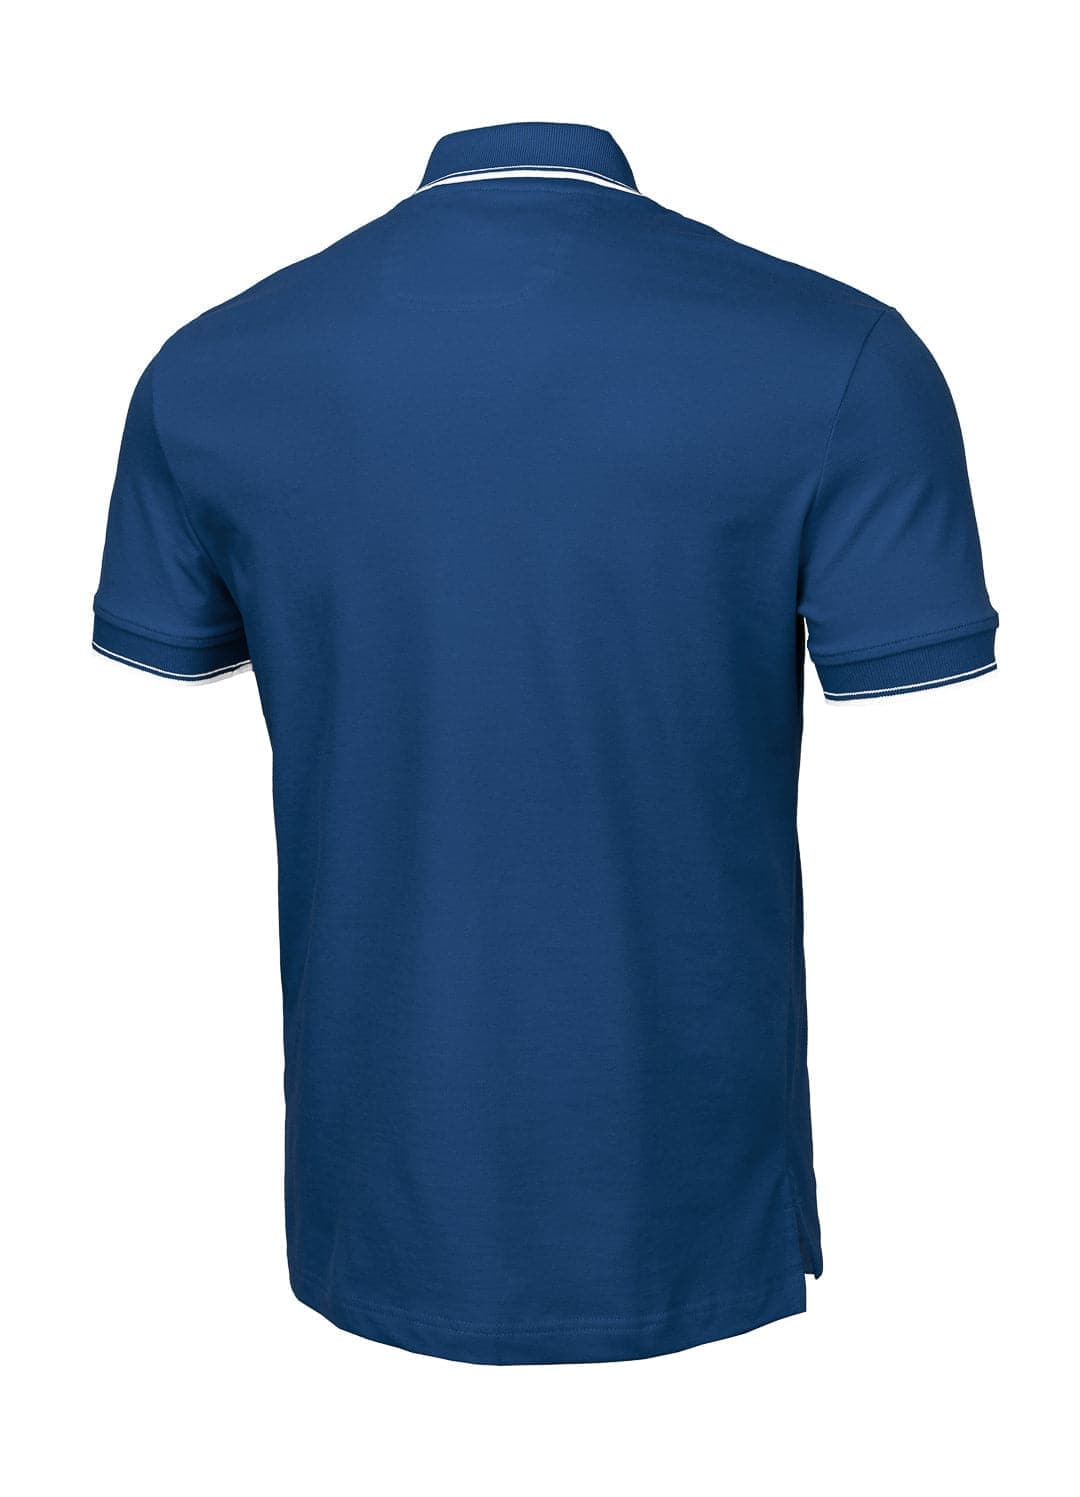 T-shirt POLO REGULAR STRIPES Spandex 250 GSM Blue - Pitbull West Coast International Store 